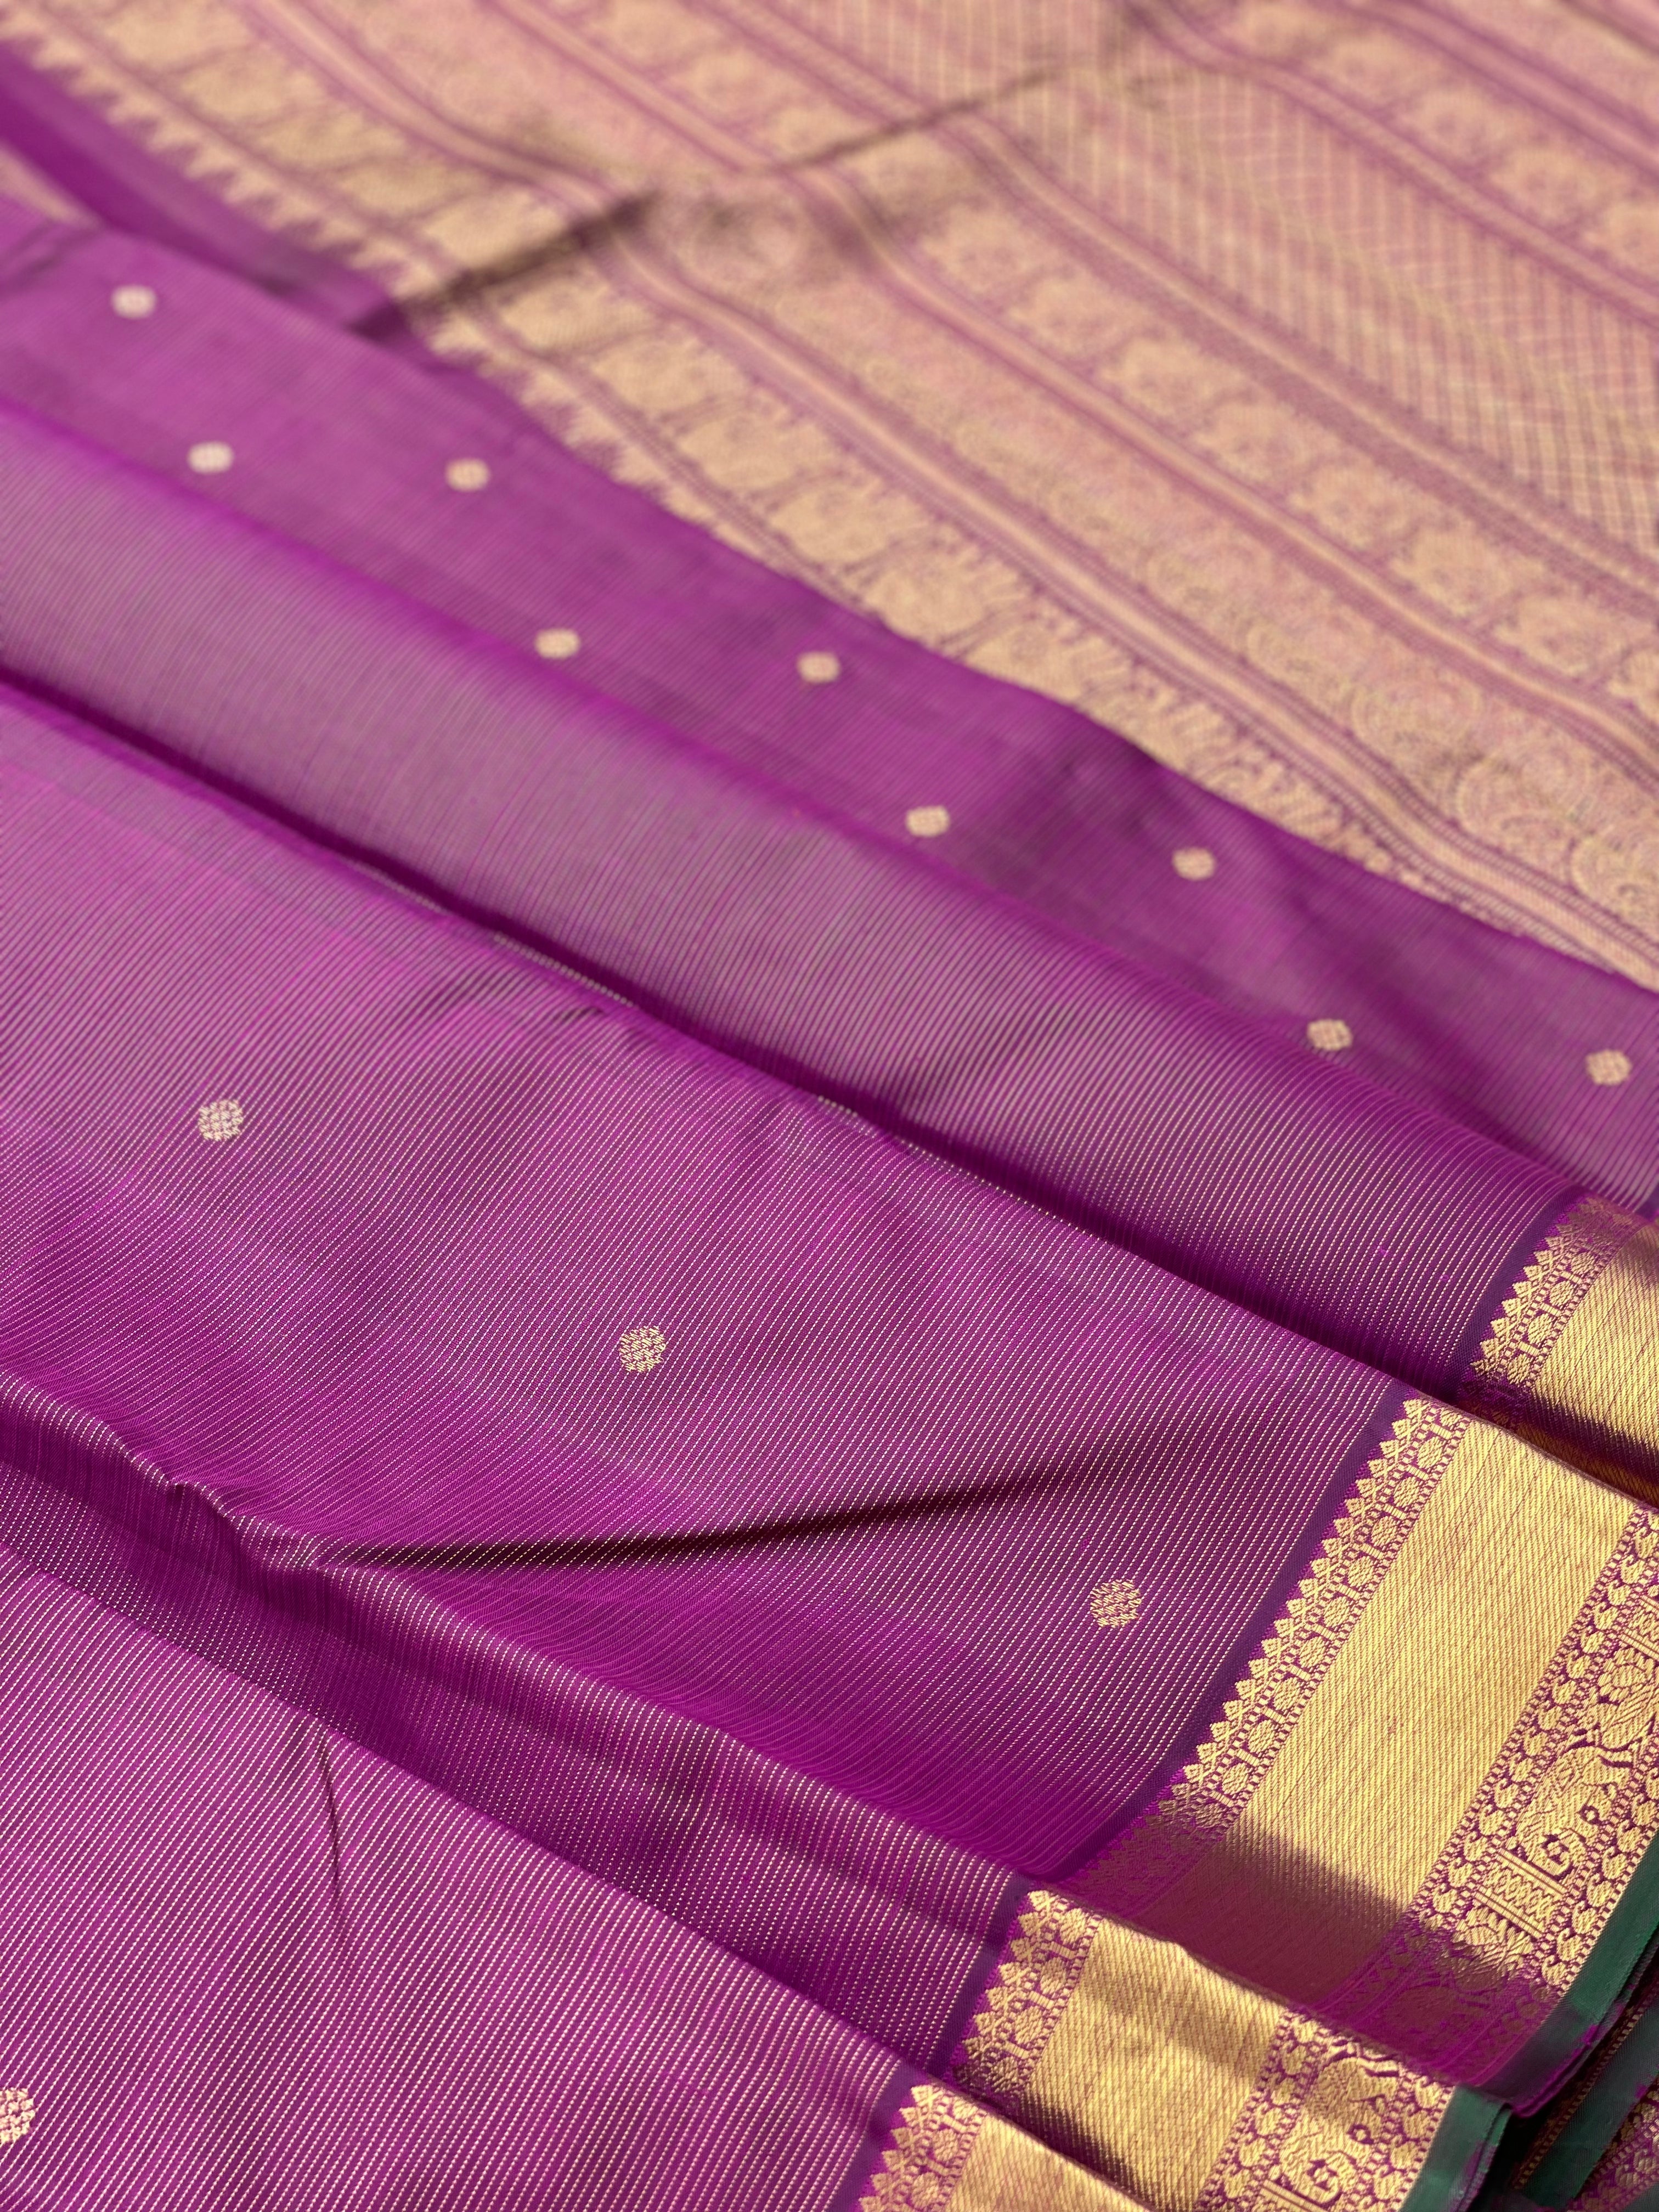 Heirloom vairaoosi kanchivaram silk saree Deep Lavender with pink shade